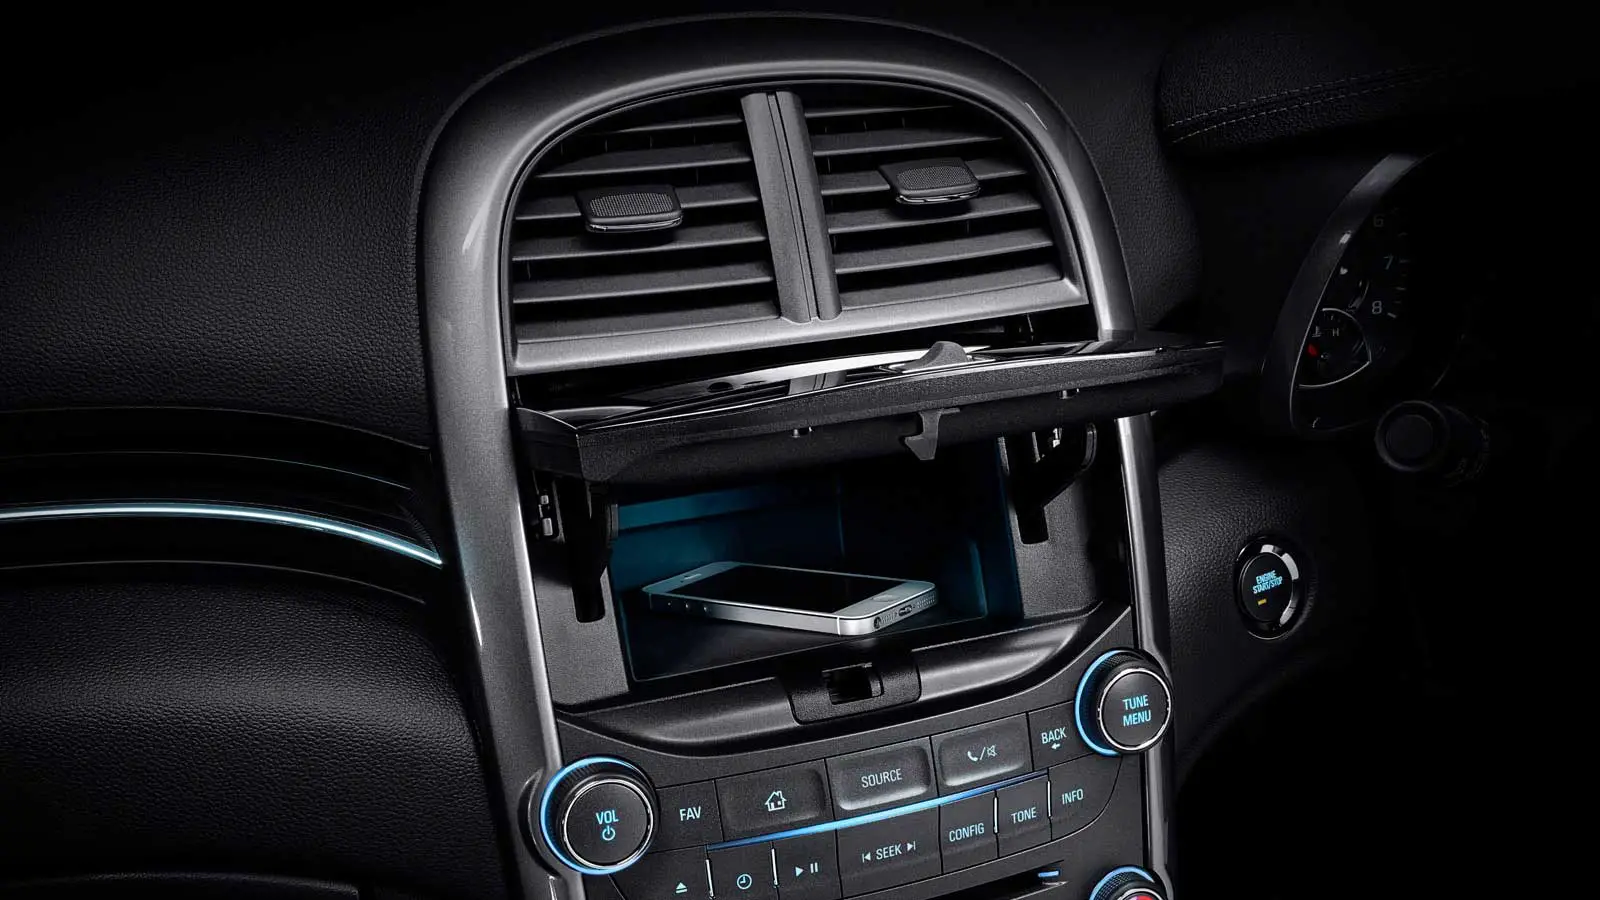 Holden Malibu CDX 2.4L Interior view